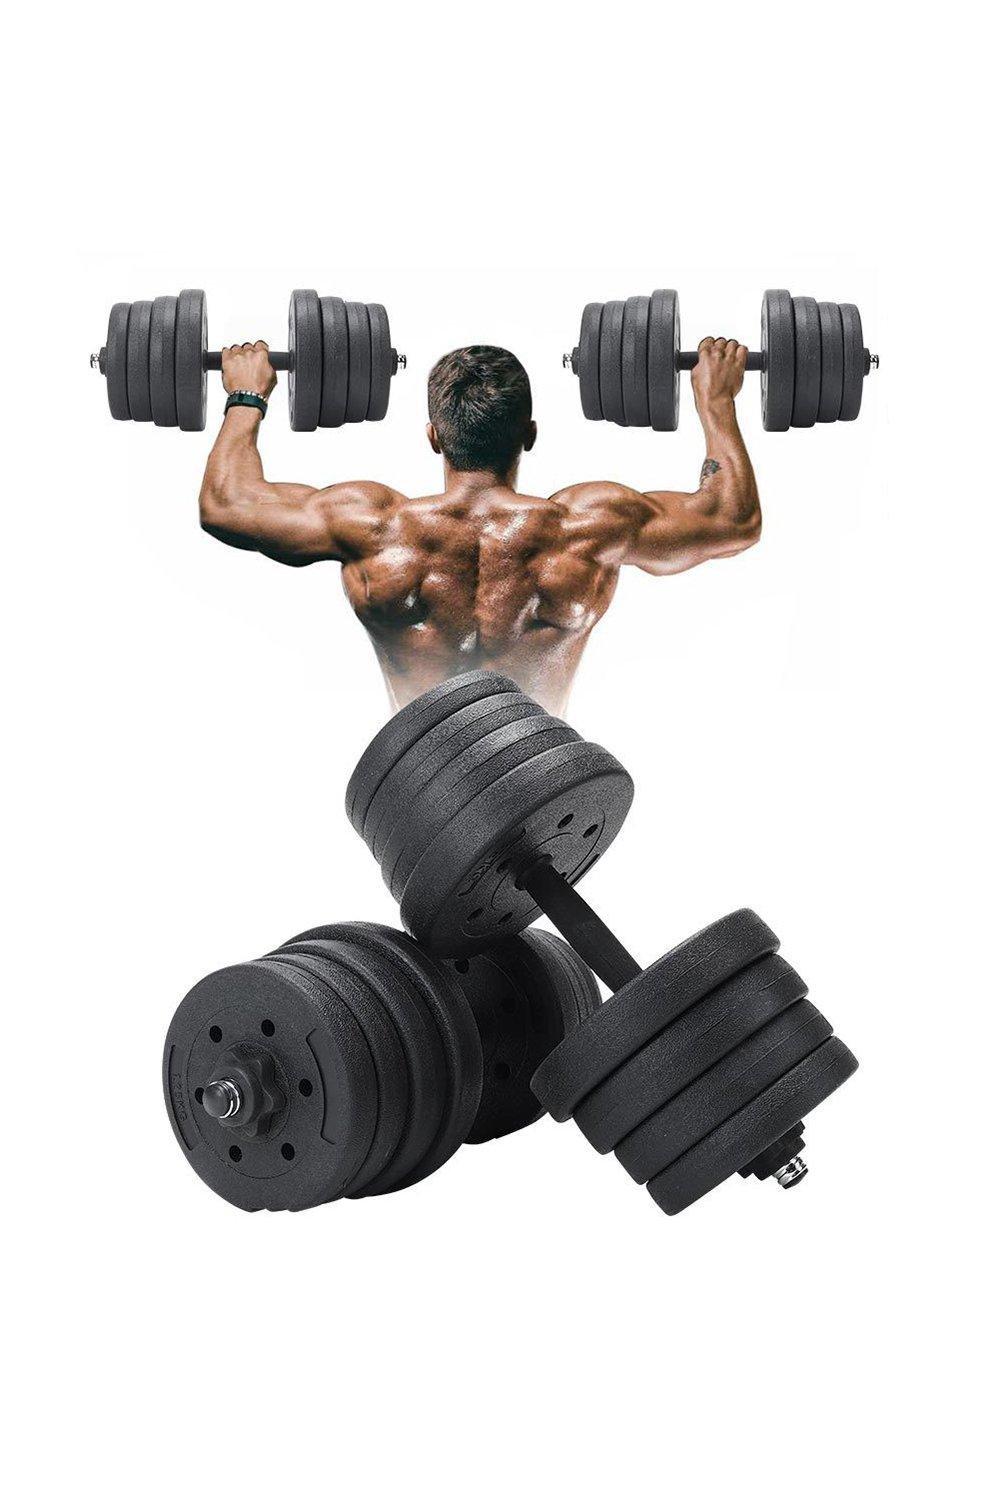 2 Sets 30kg Gym Weights Workout Fitness Biceps Dumbells Training